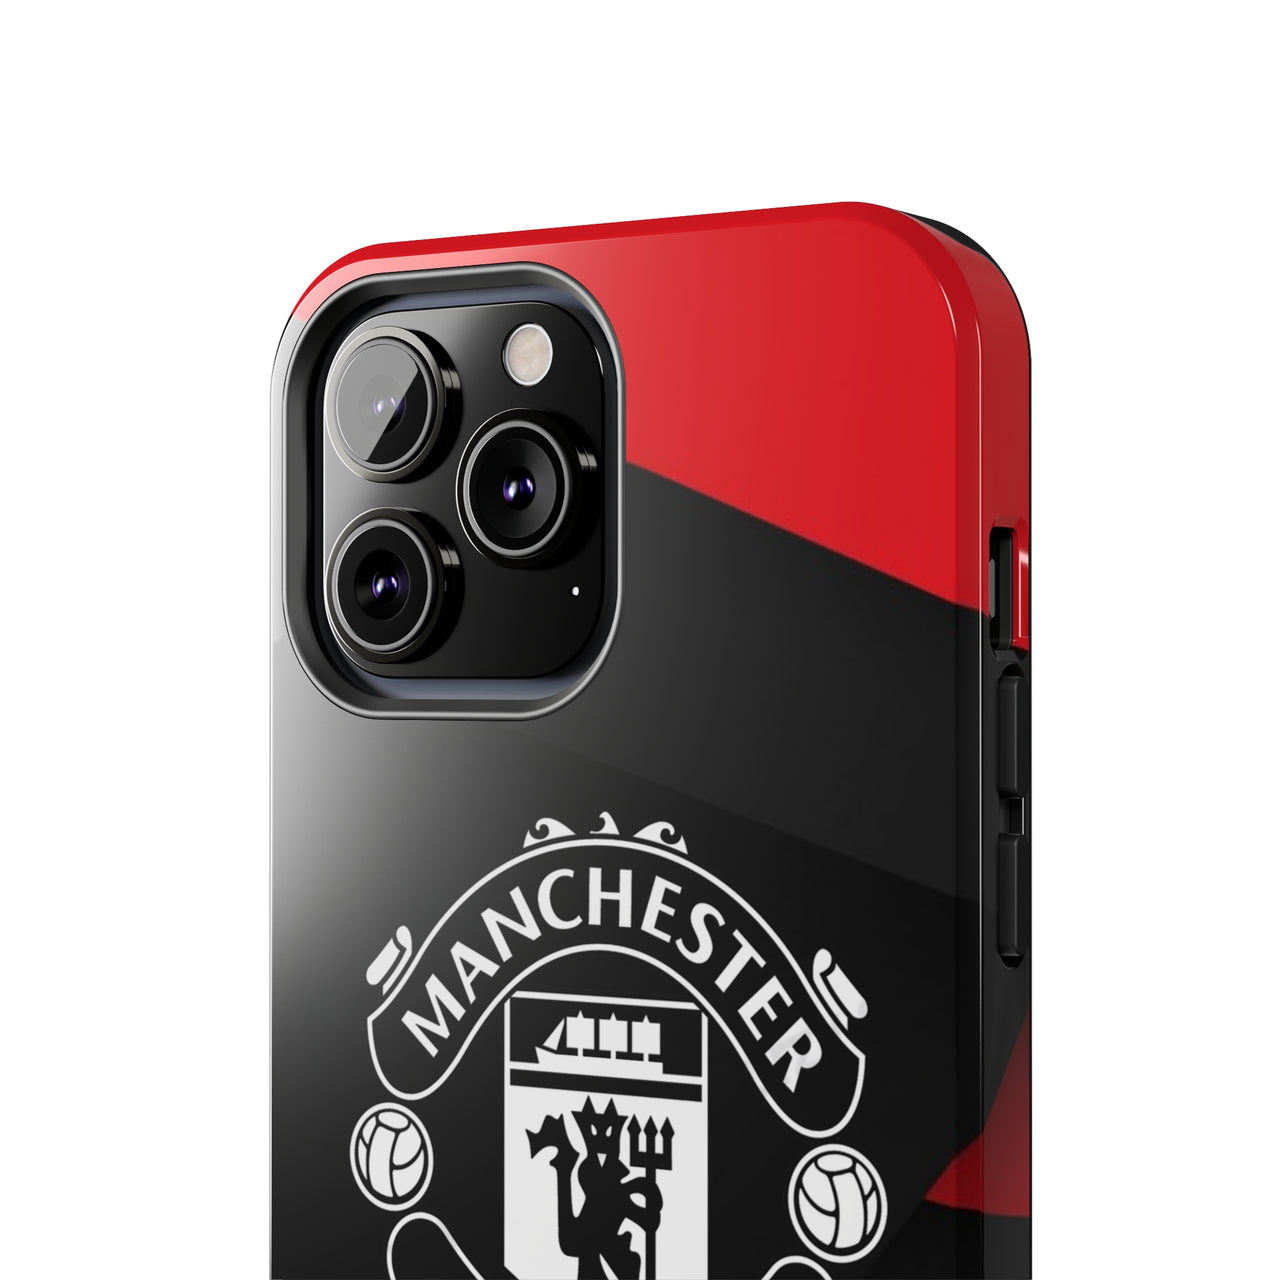 Manchester United Phone Case